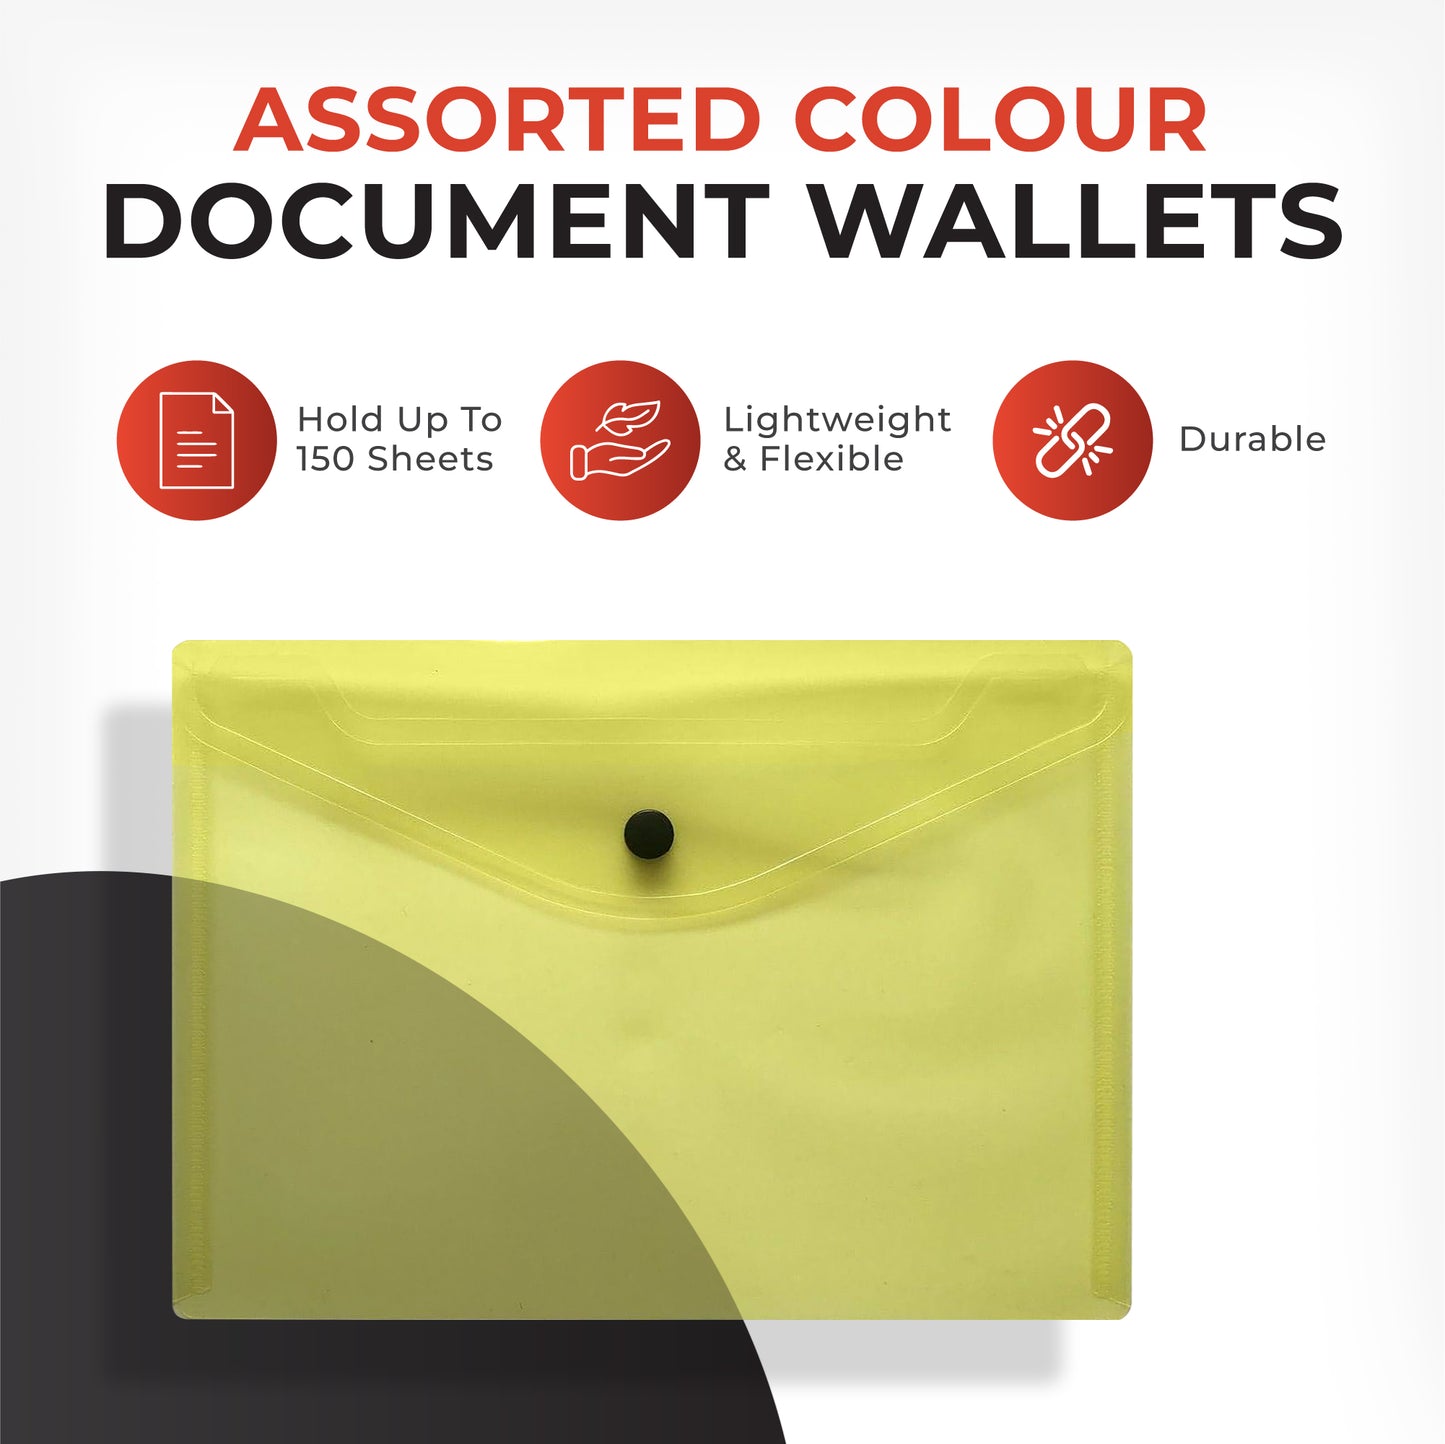 Pack of 12 Janrax A4 Orange Document Wallets - Button Stud Folder